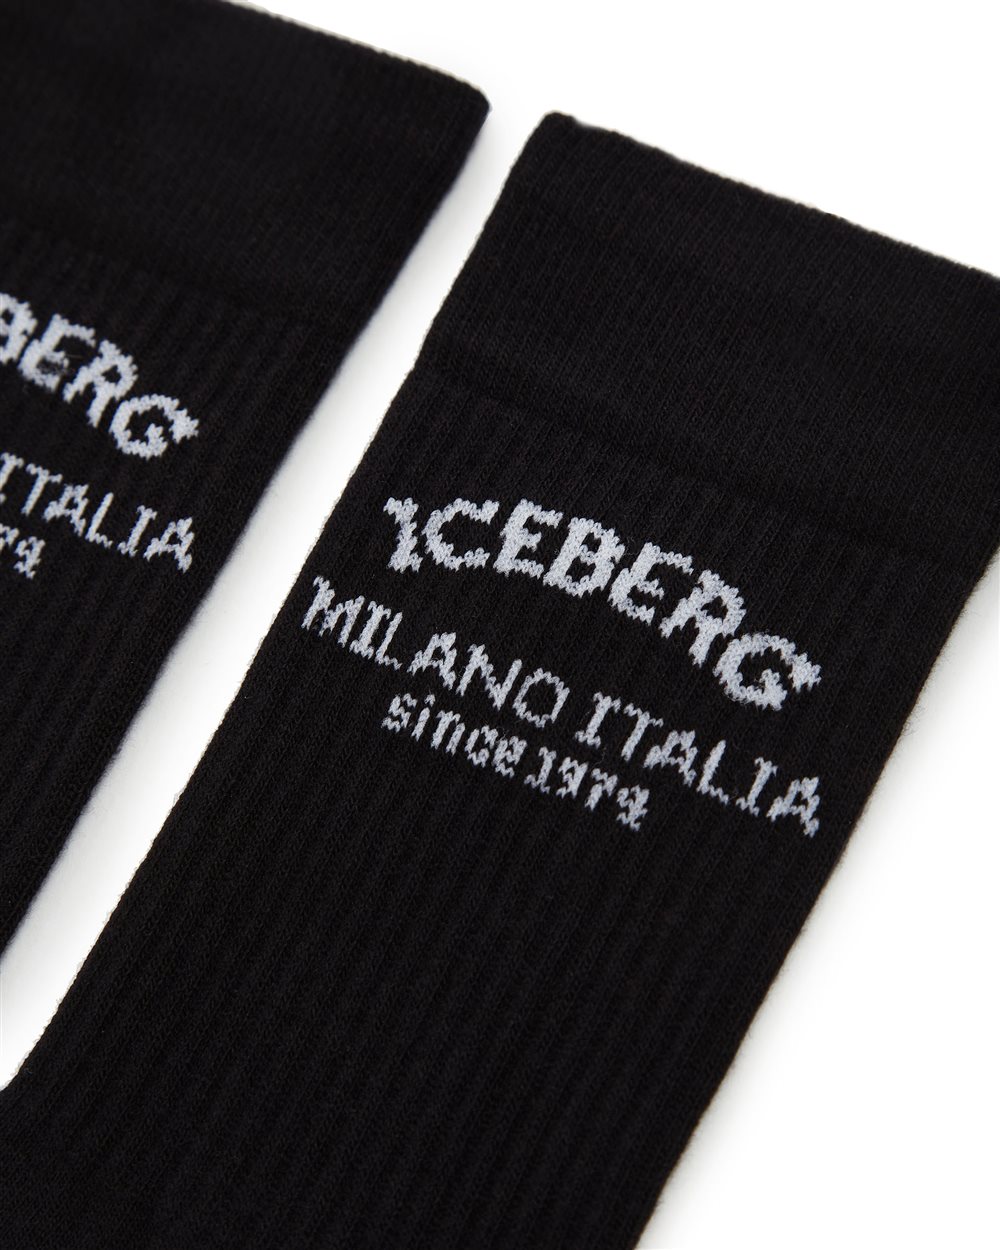 Sock with logo - Iceberg - Official Website